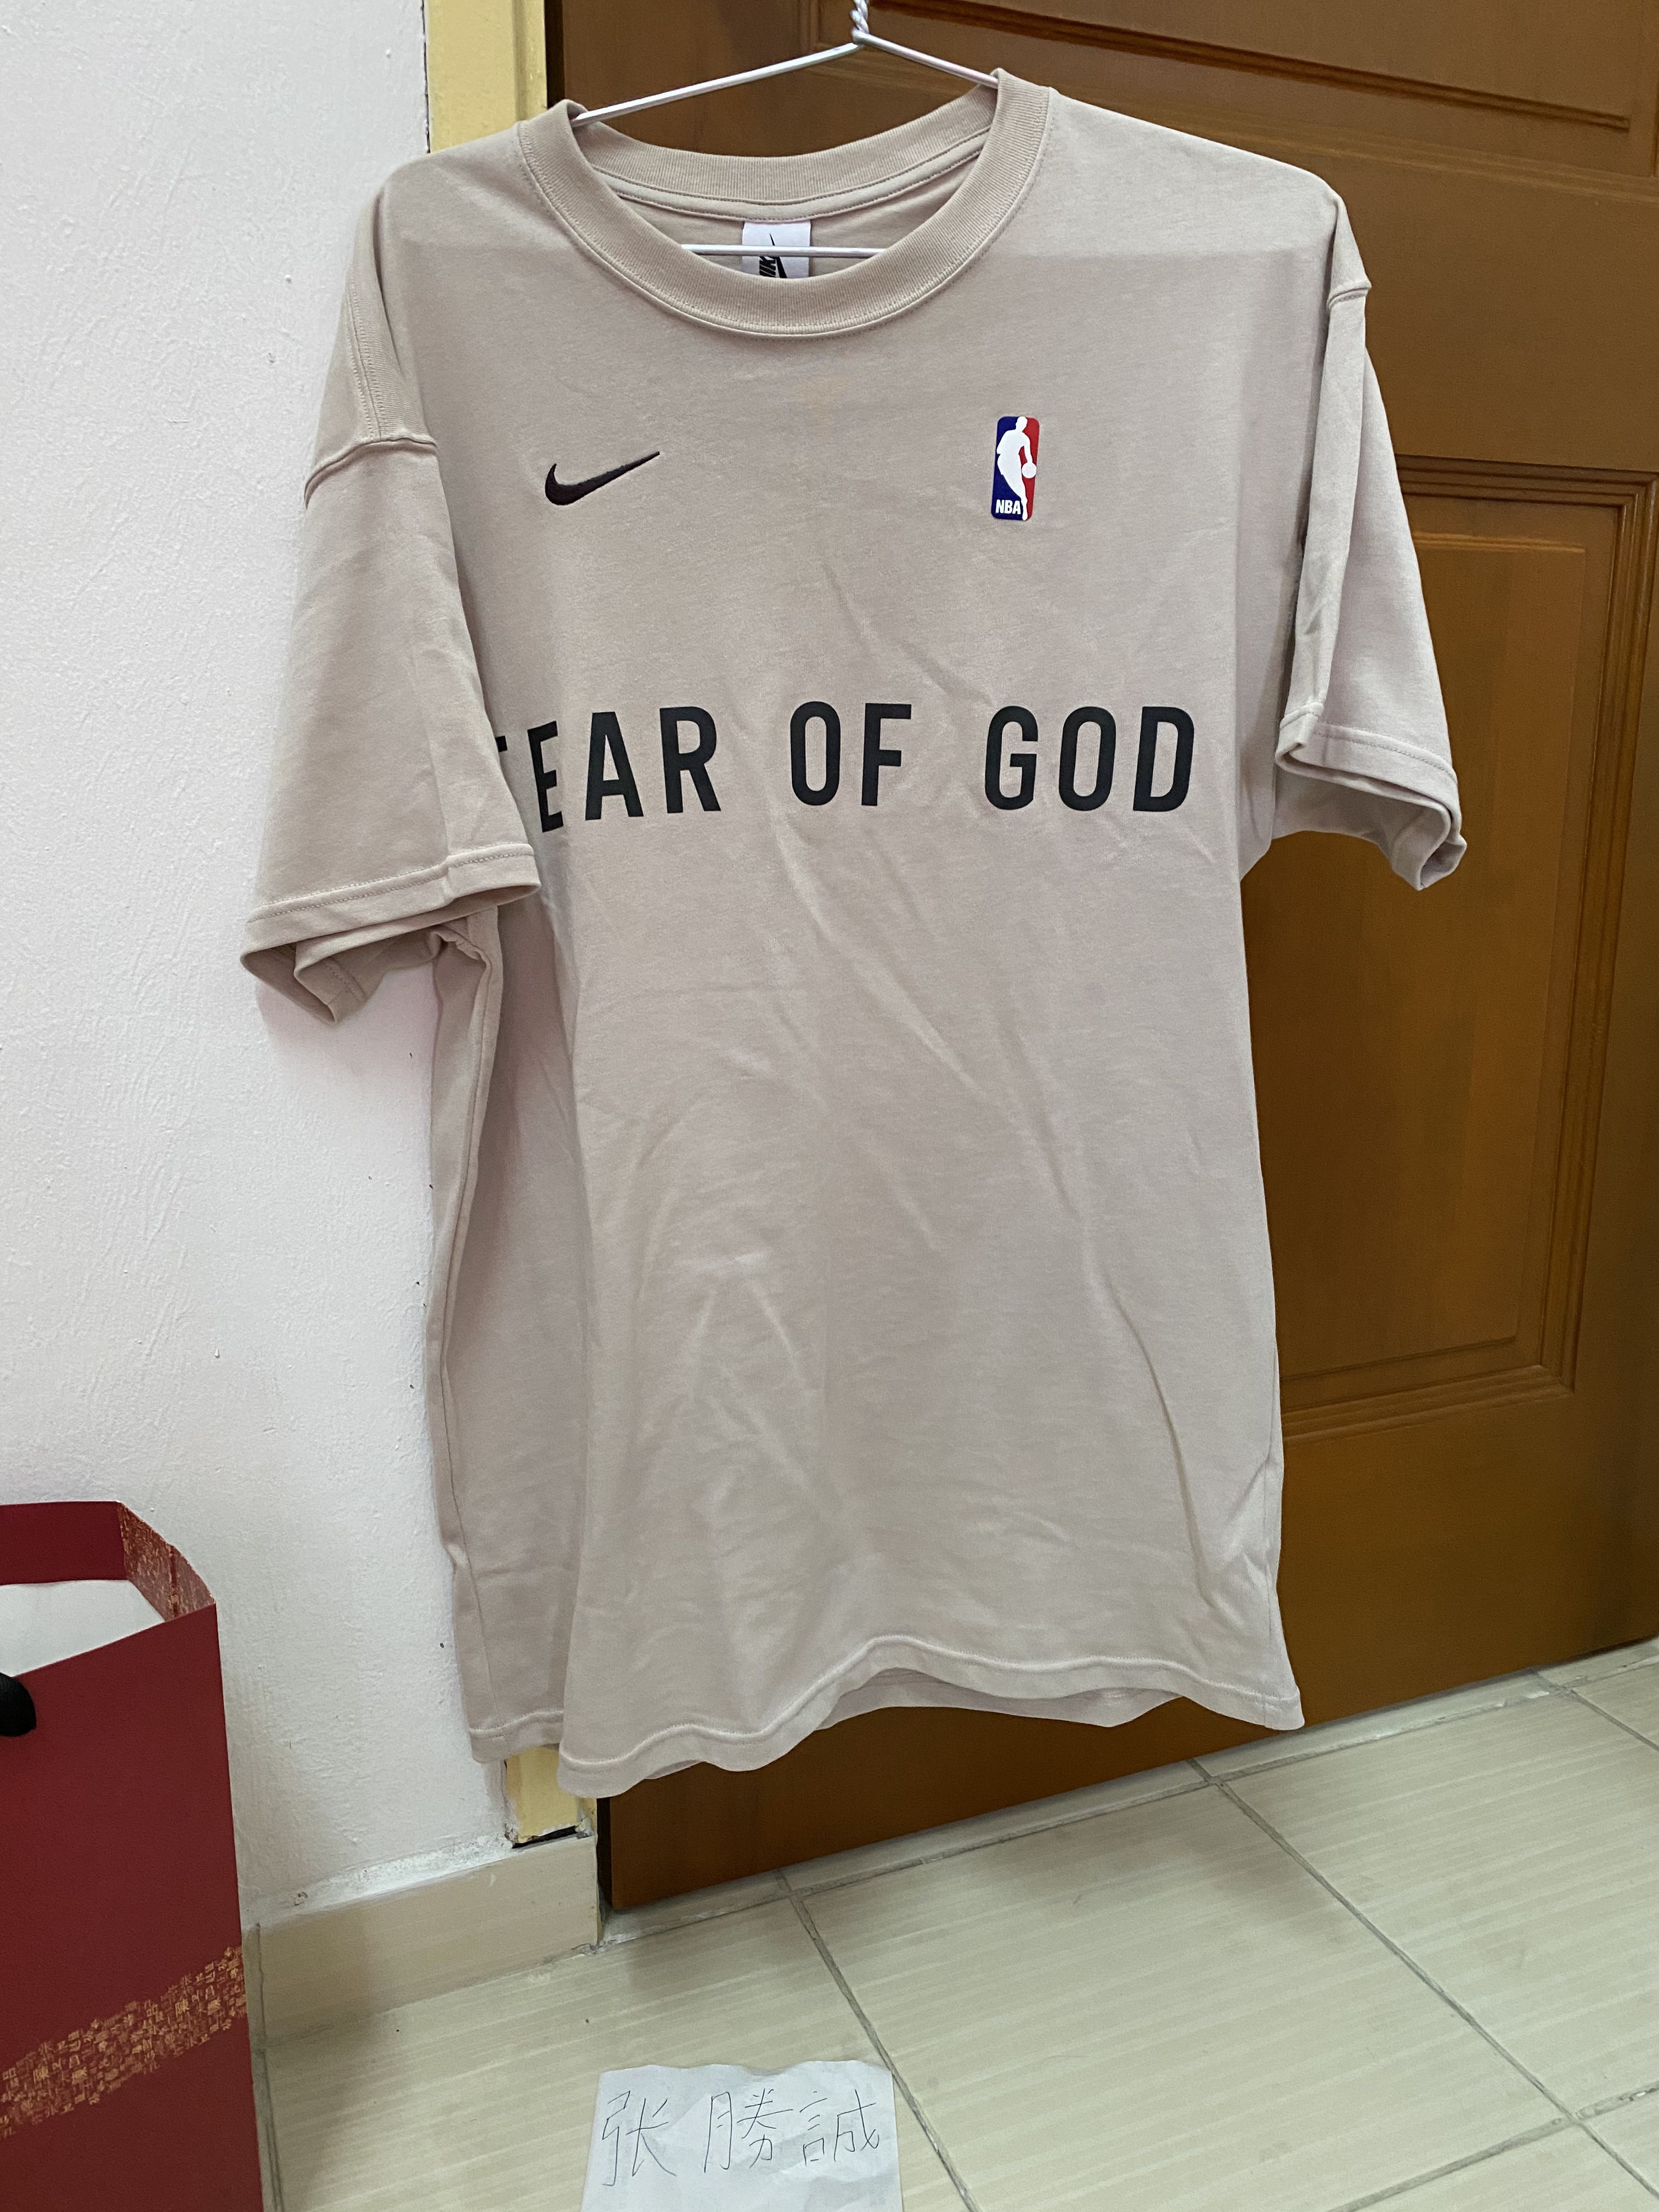 Nike x Nba x fear of god tee, Men's 